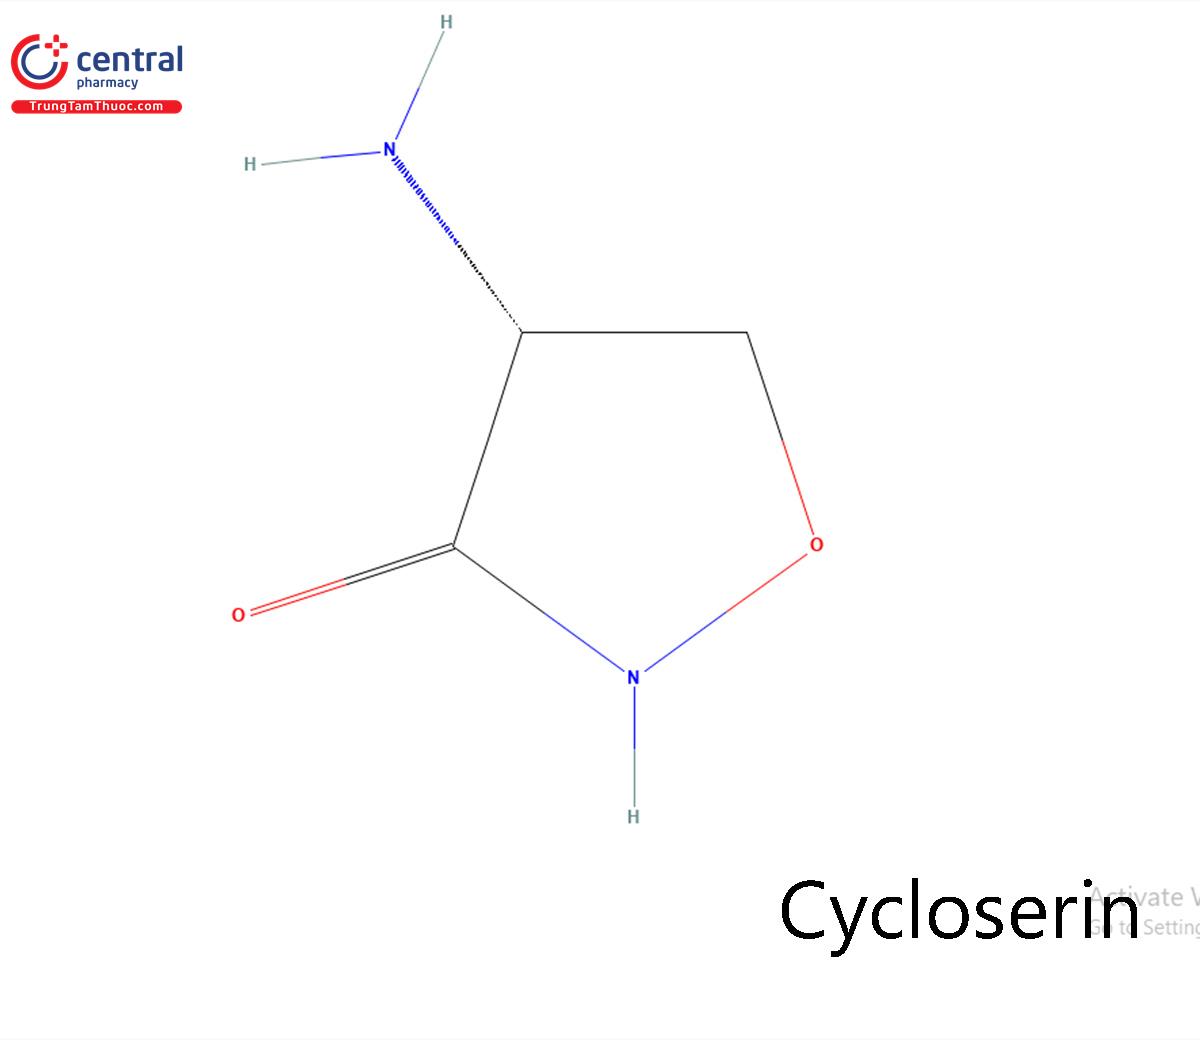 Cycloserin